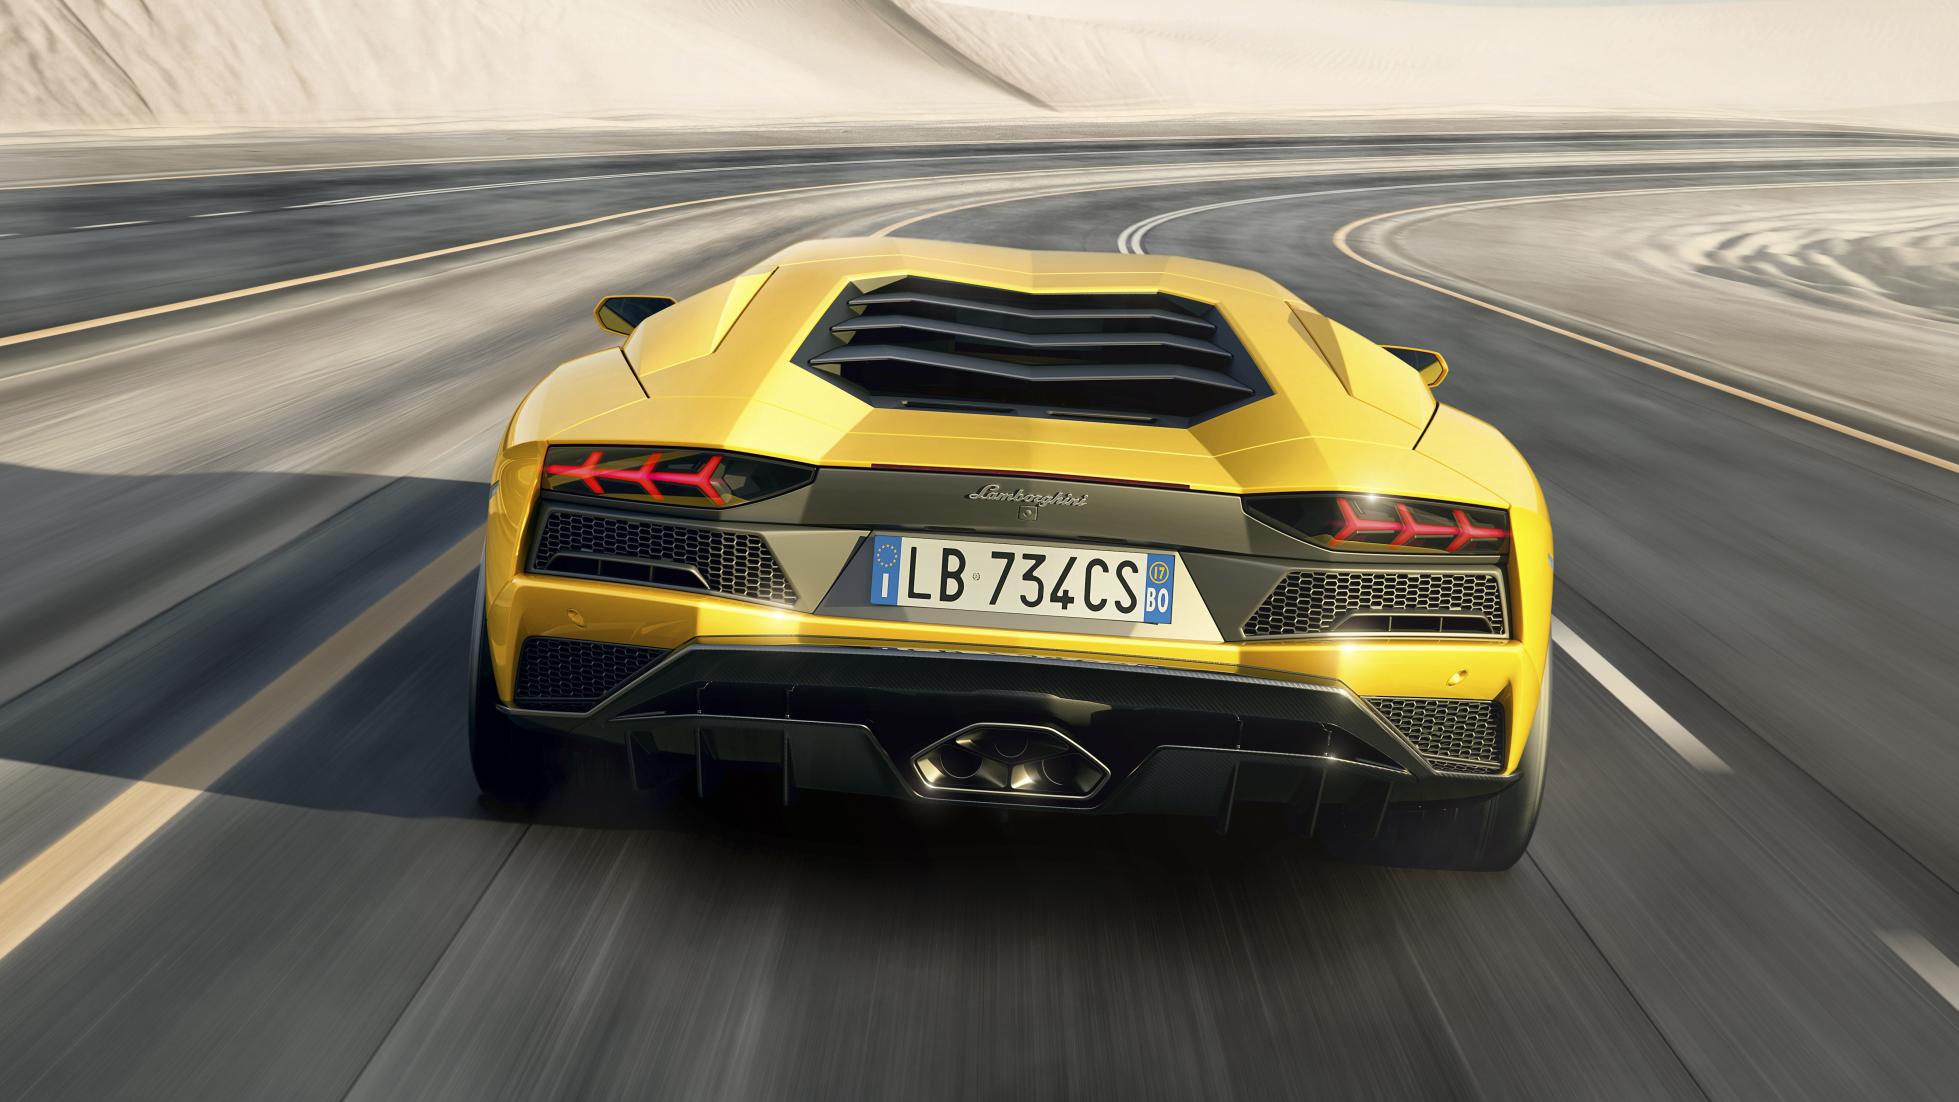 Lamborghini Aventador S Coupe at rear end